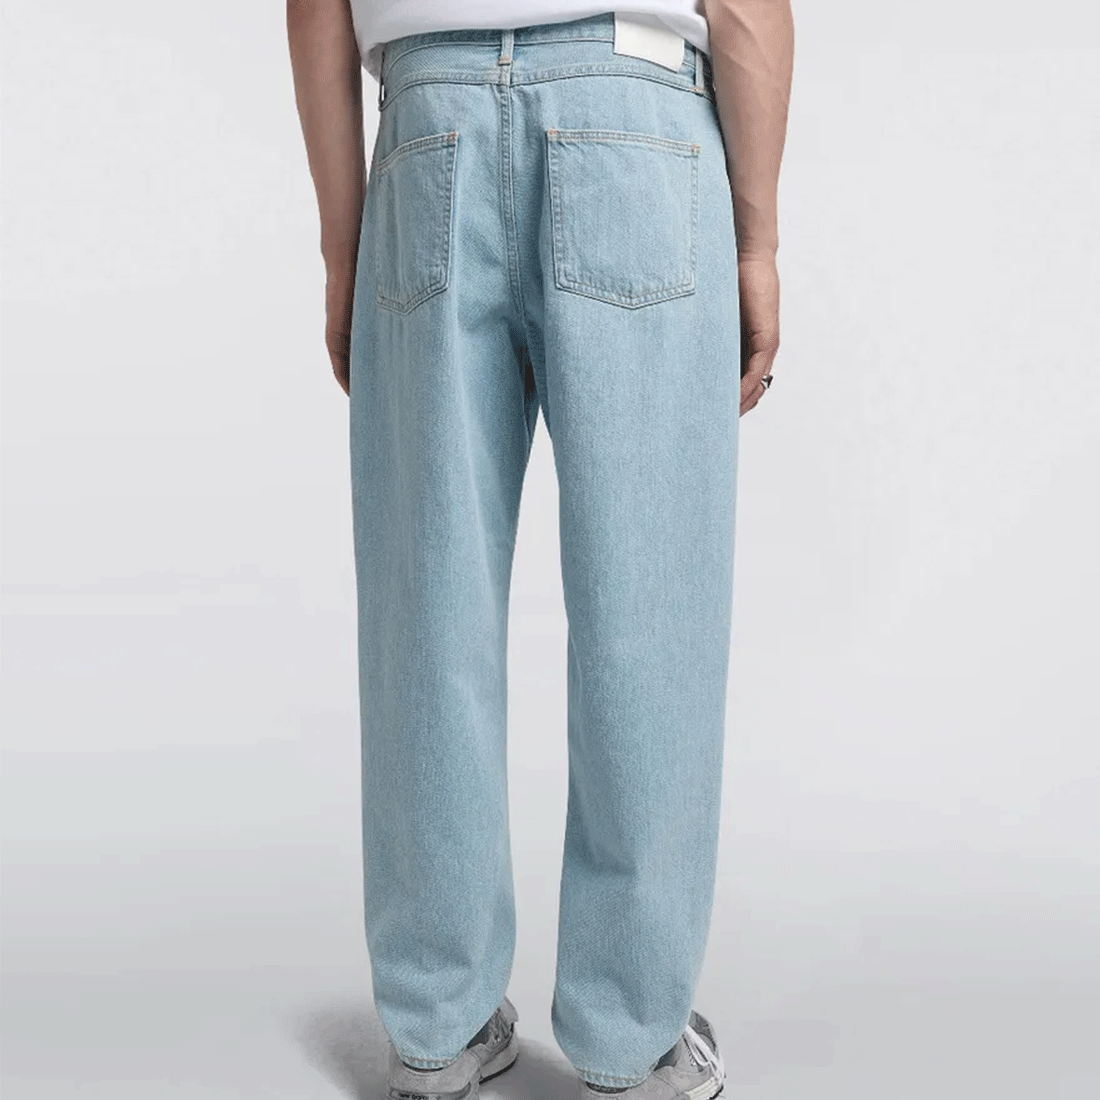 Edwin Jeans - Cosmos Pant - Light Blue